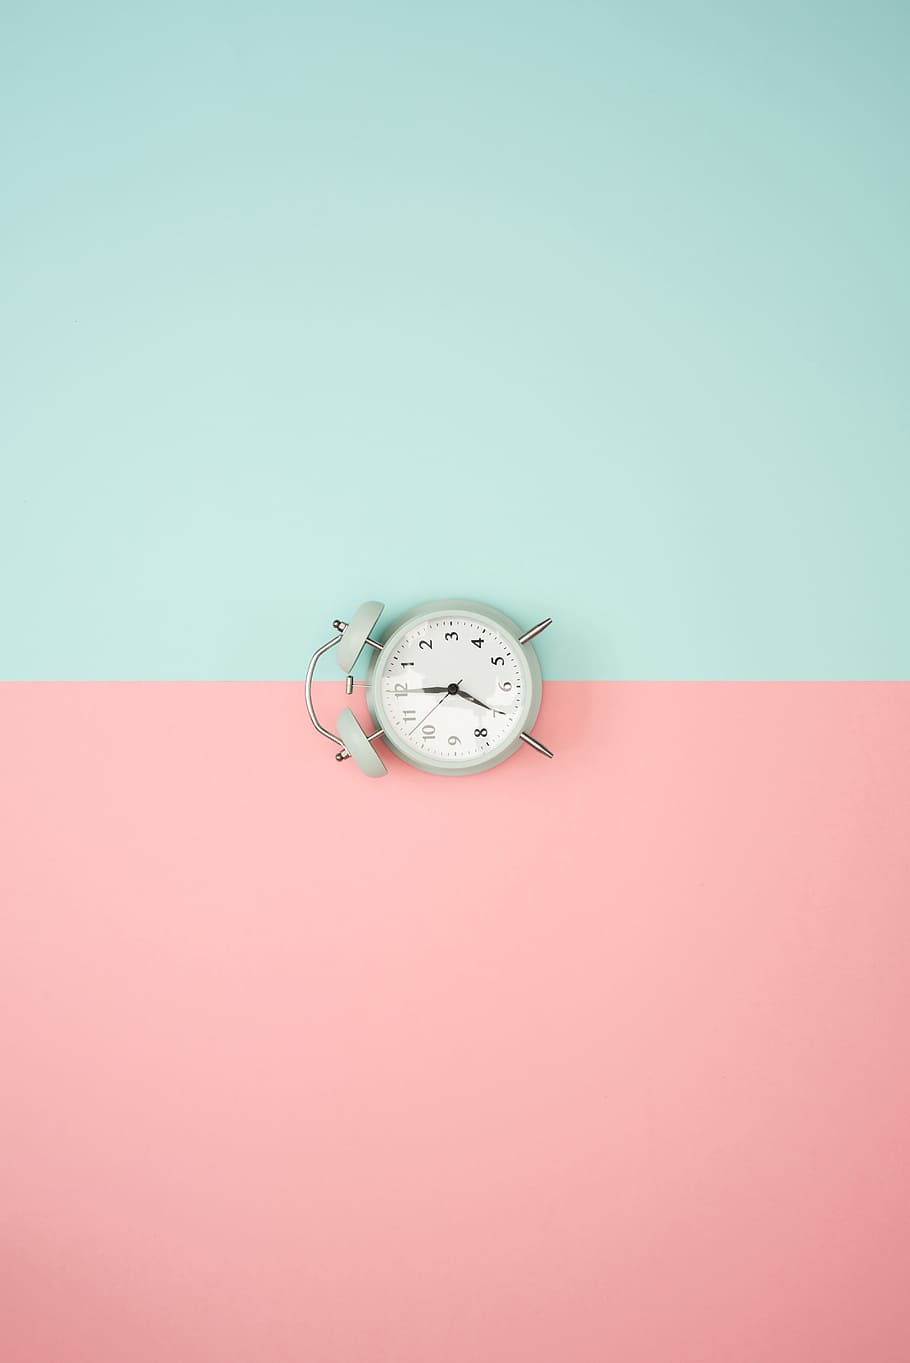 clock, pastel background, blue, pink, time, alarm, colorful, colored background, studio shot, indoors